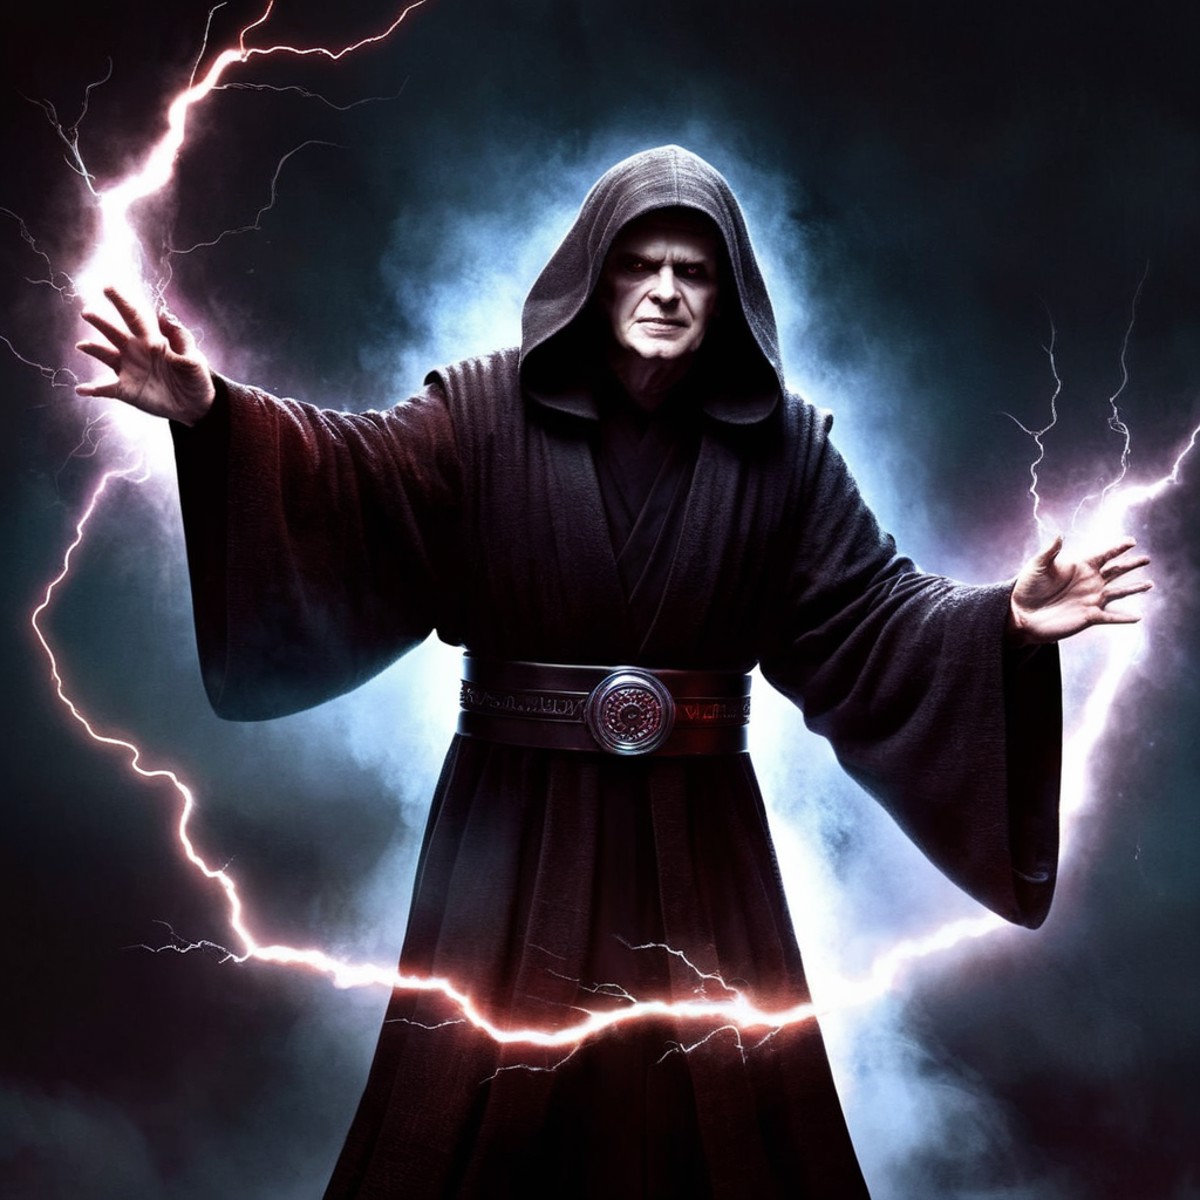 Dark Fantasy Art of  <lora:Darth Sidious:1>
Darth Sidious a man in a robe shoot Force lightning from his hands in star war...